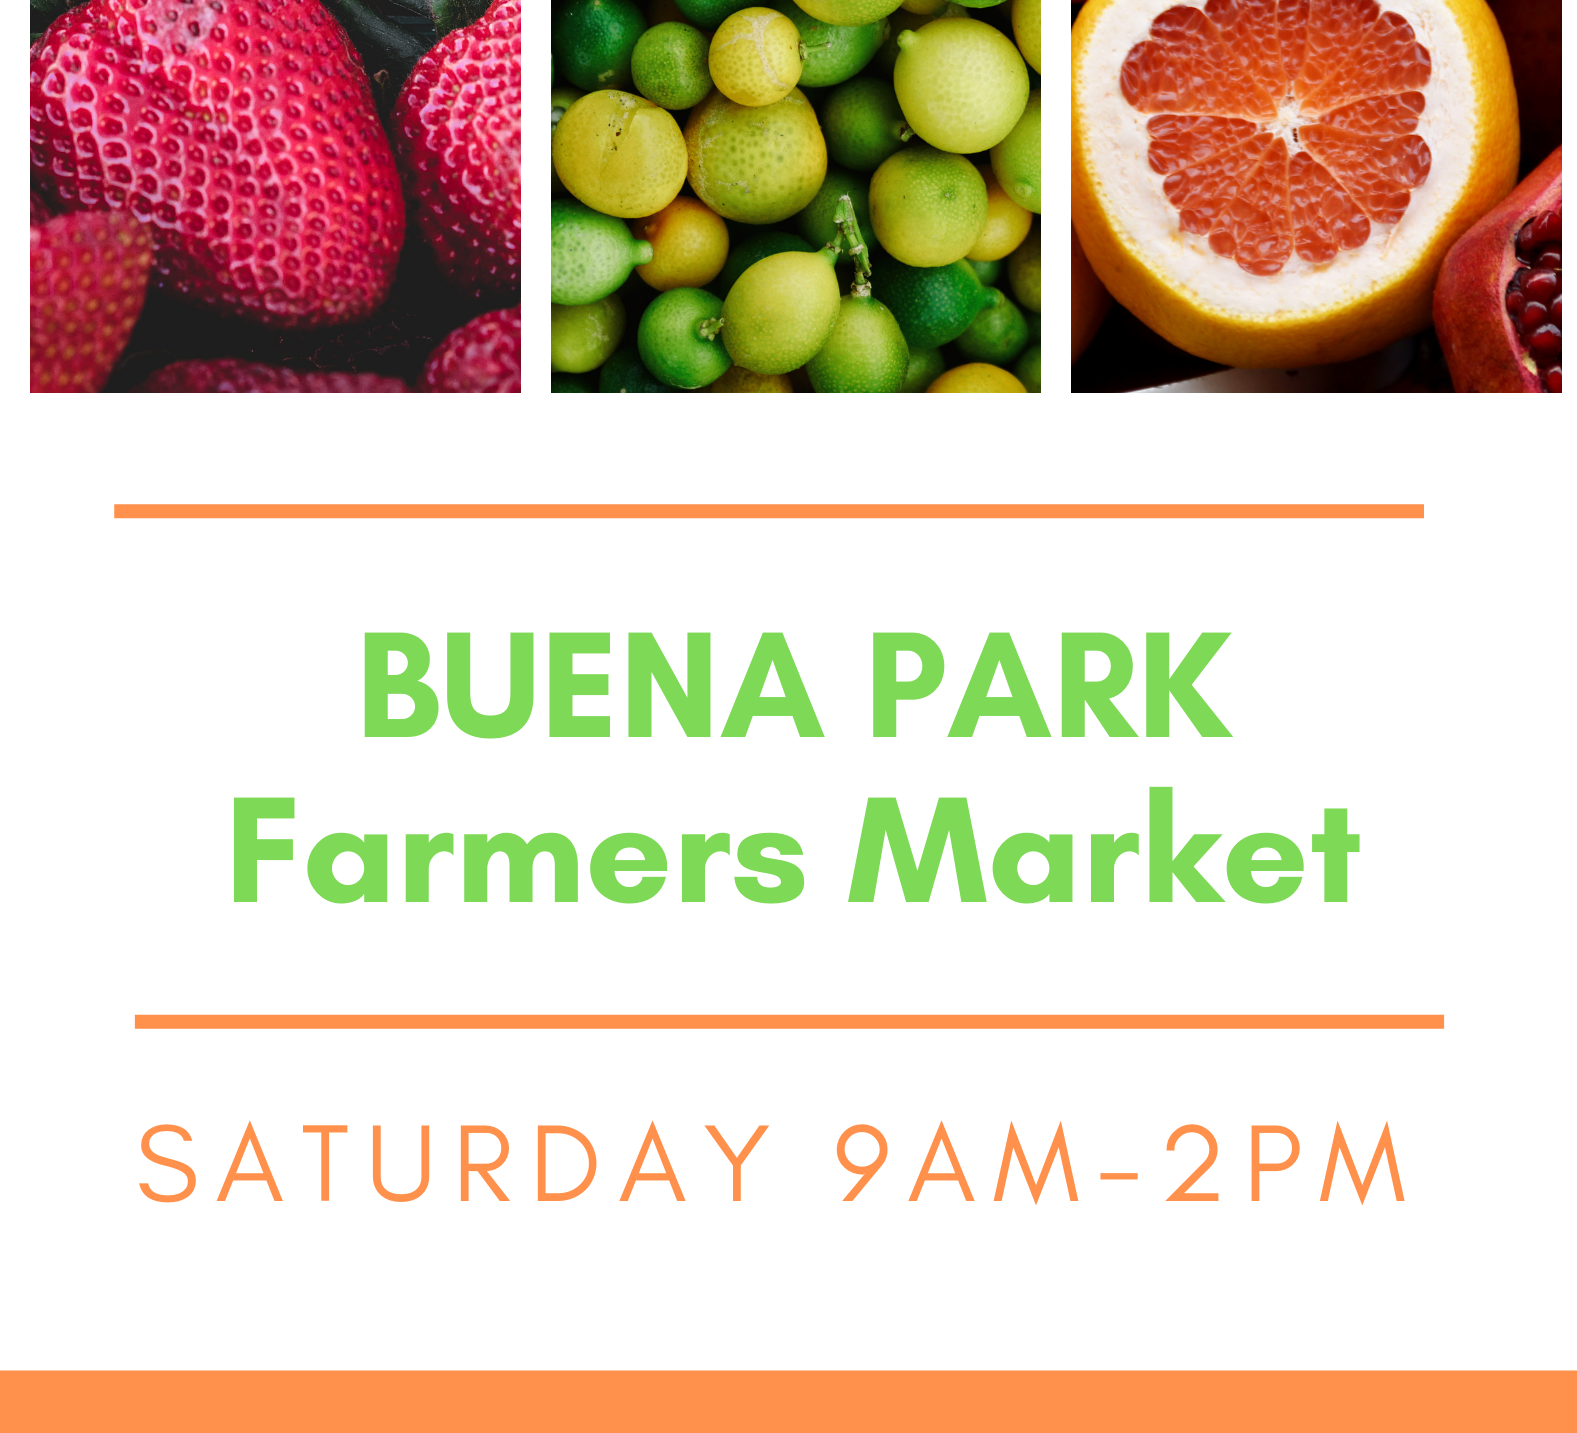 Buena Park Farmers Market